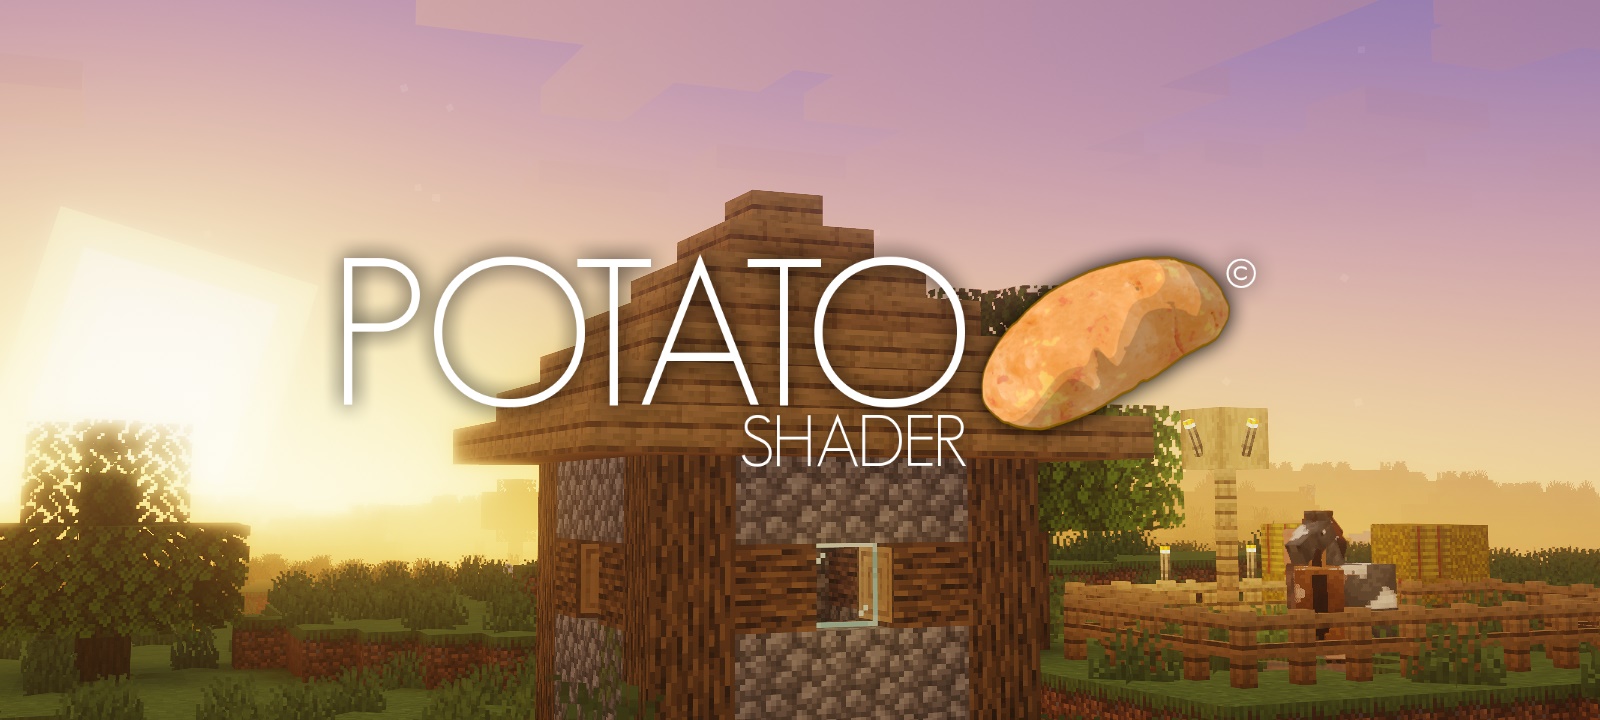 Potato Shader Banner